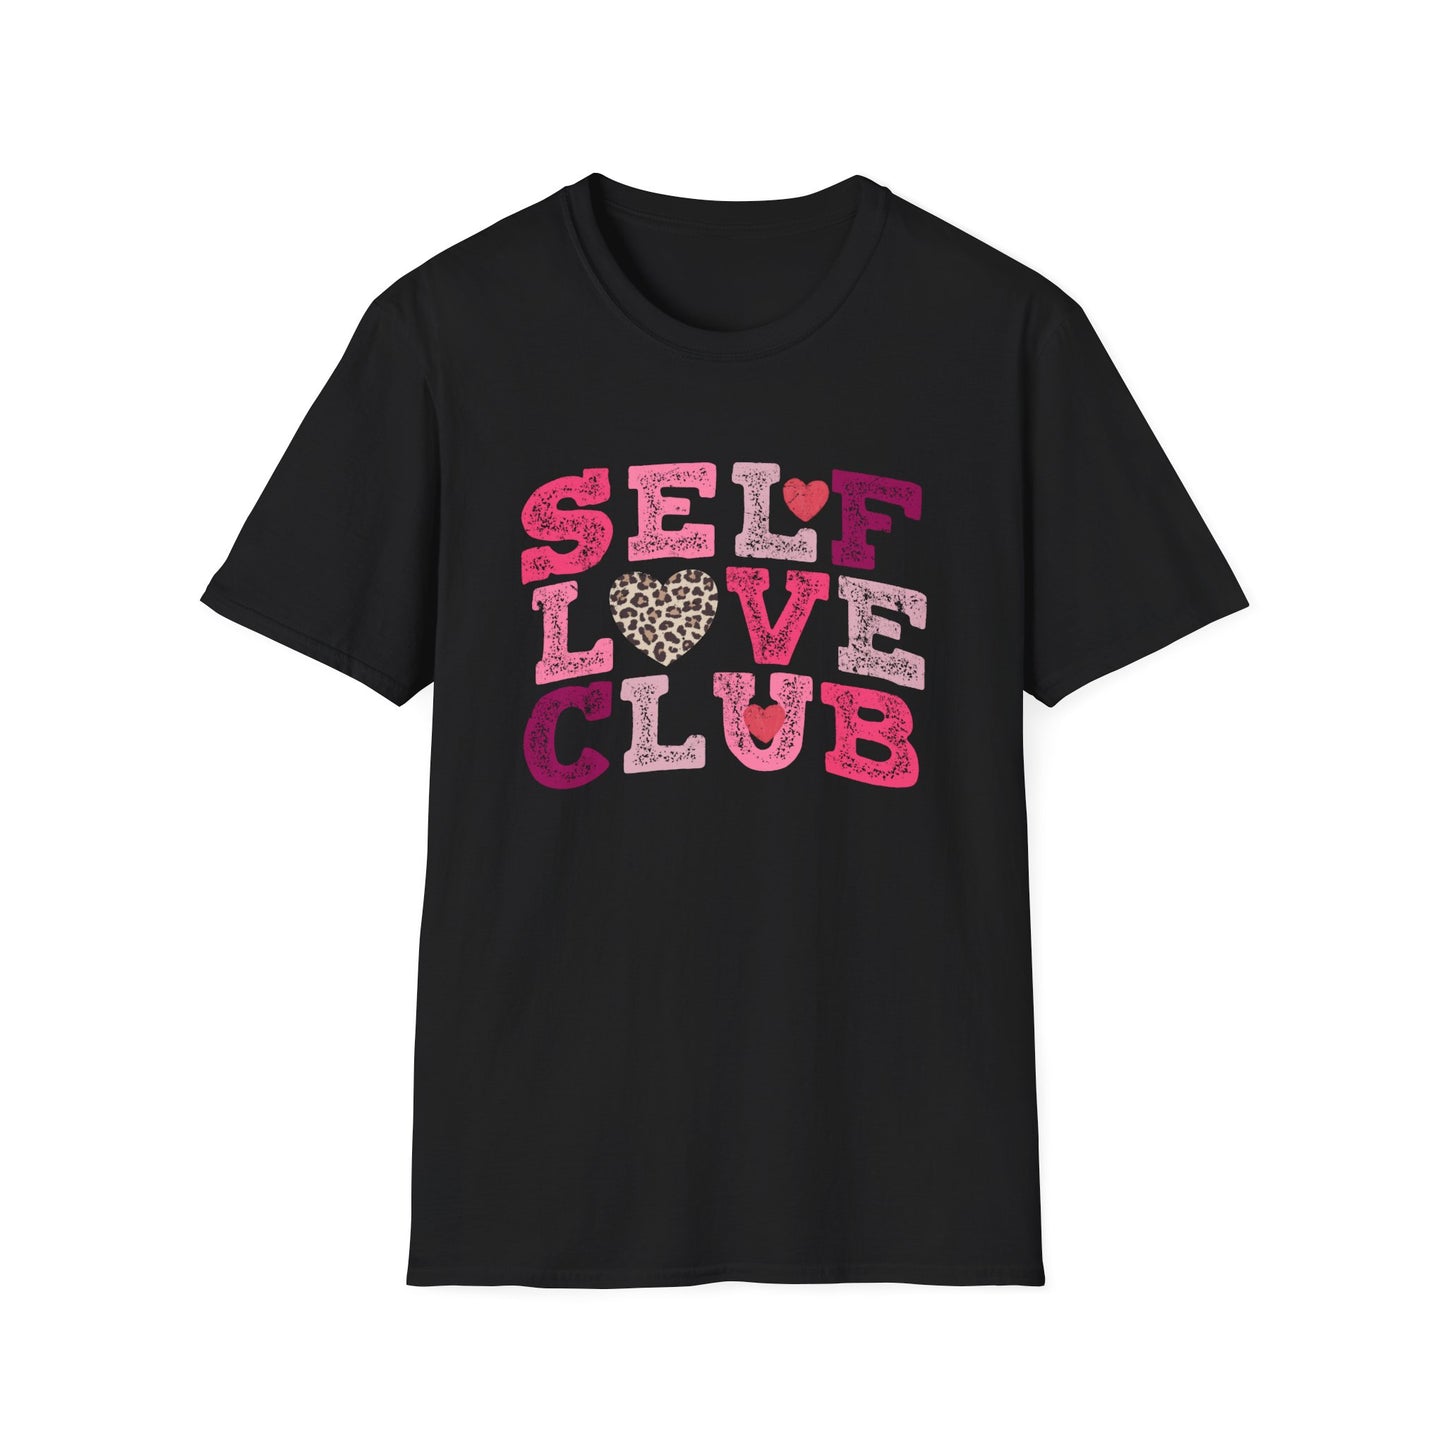 Self Love Club Shirt, Valentine's Day Shirt, Inspirational T-Shirt for Valentine's Day